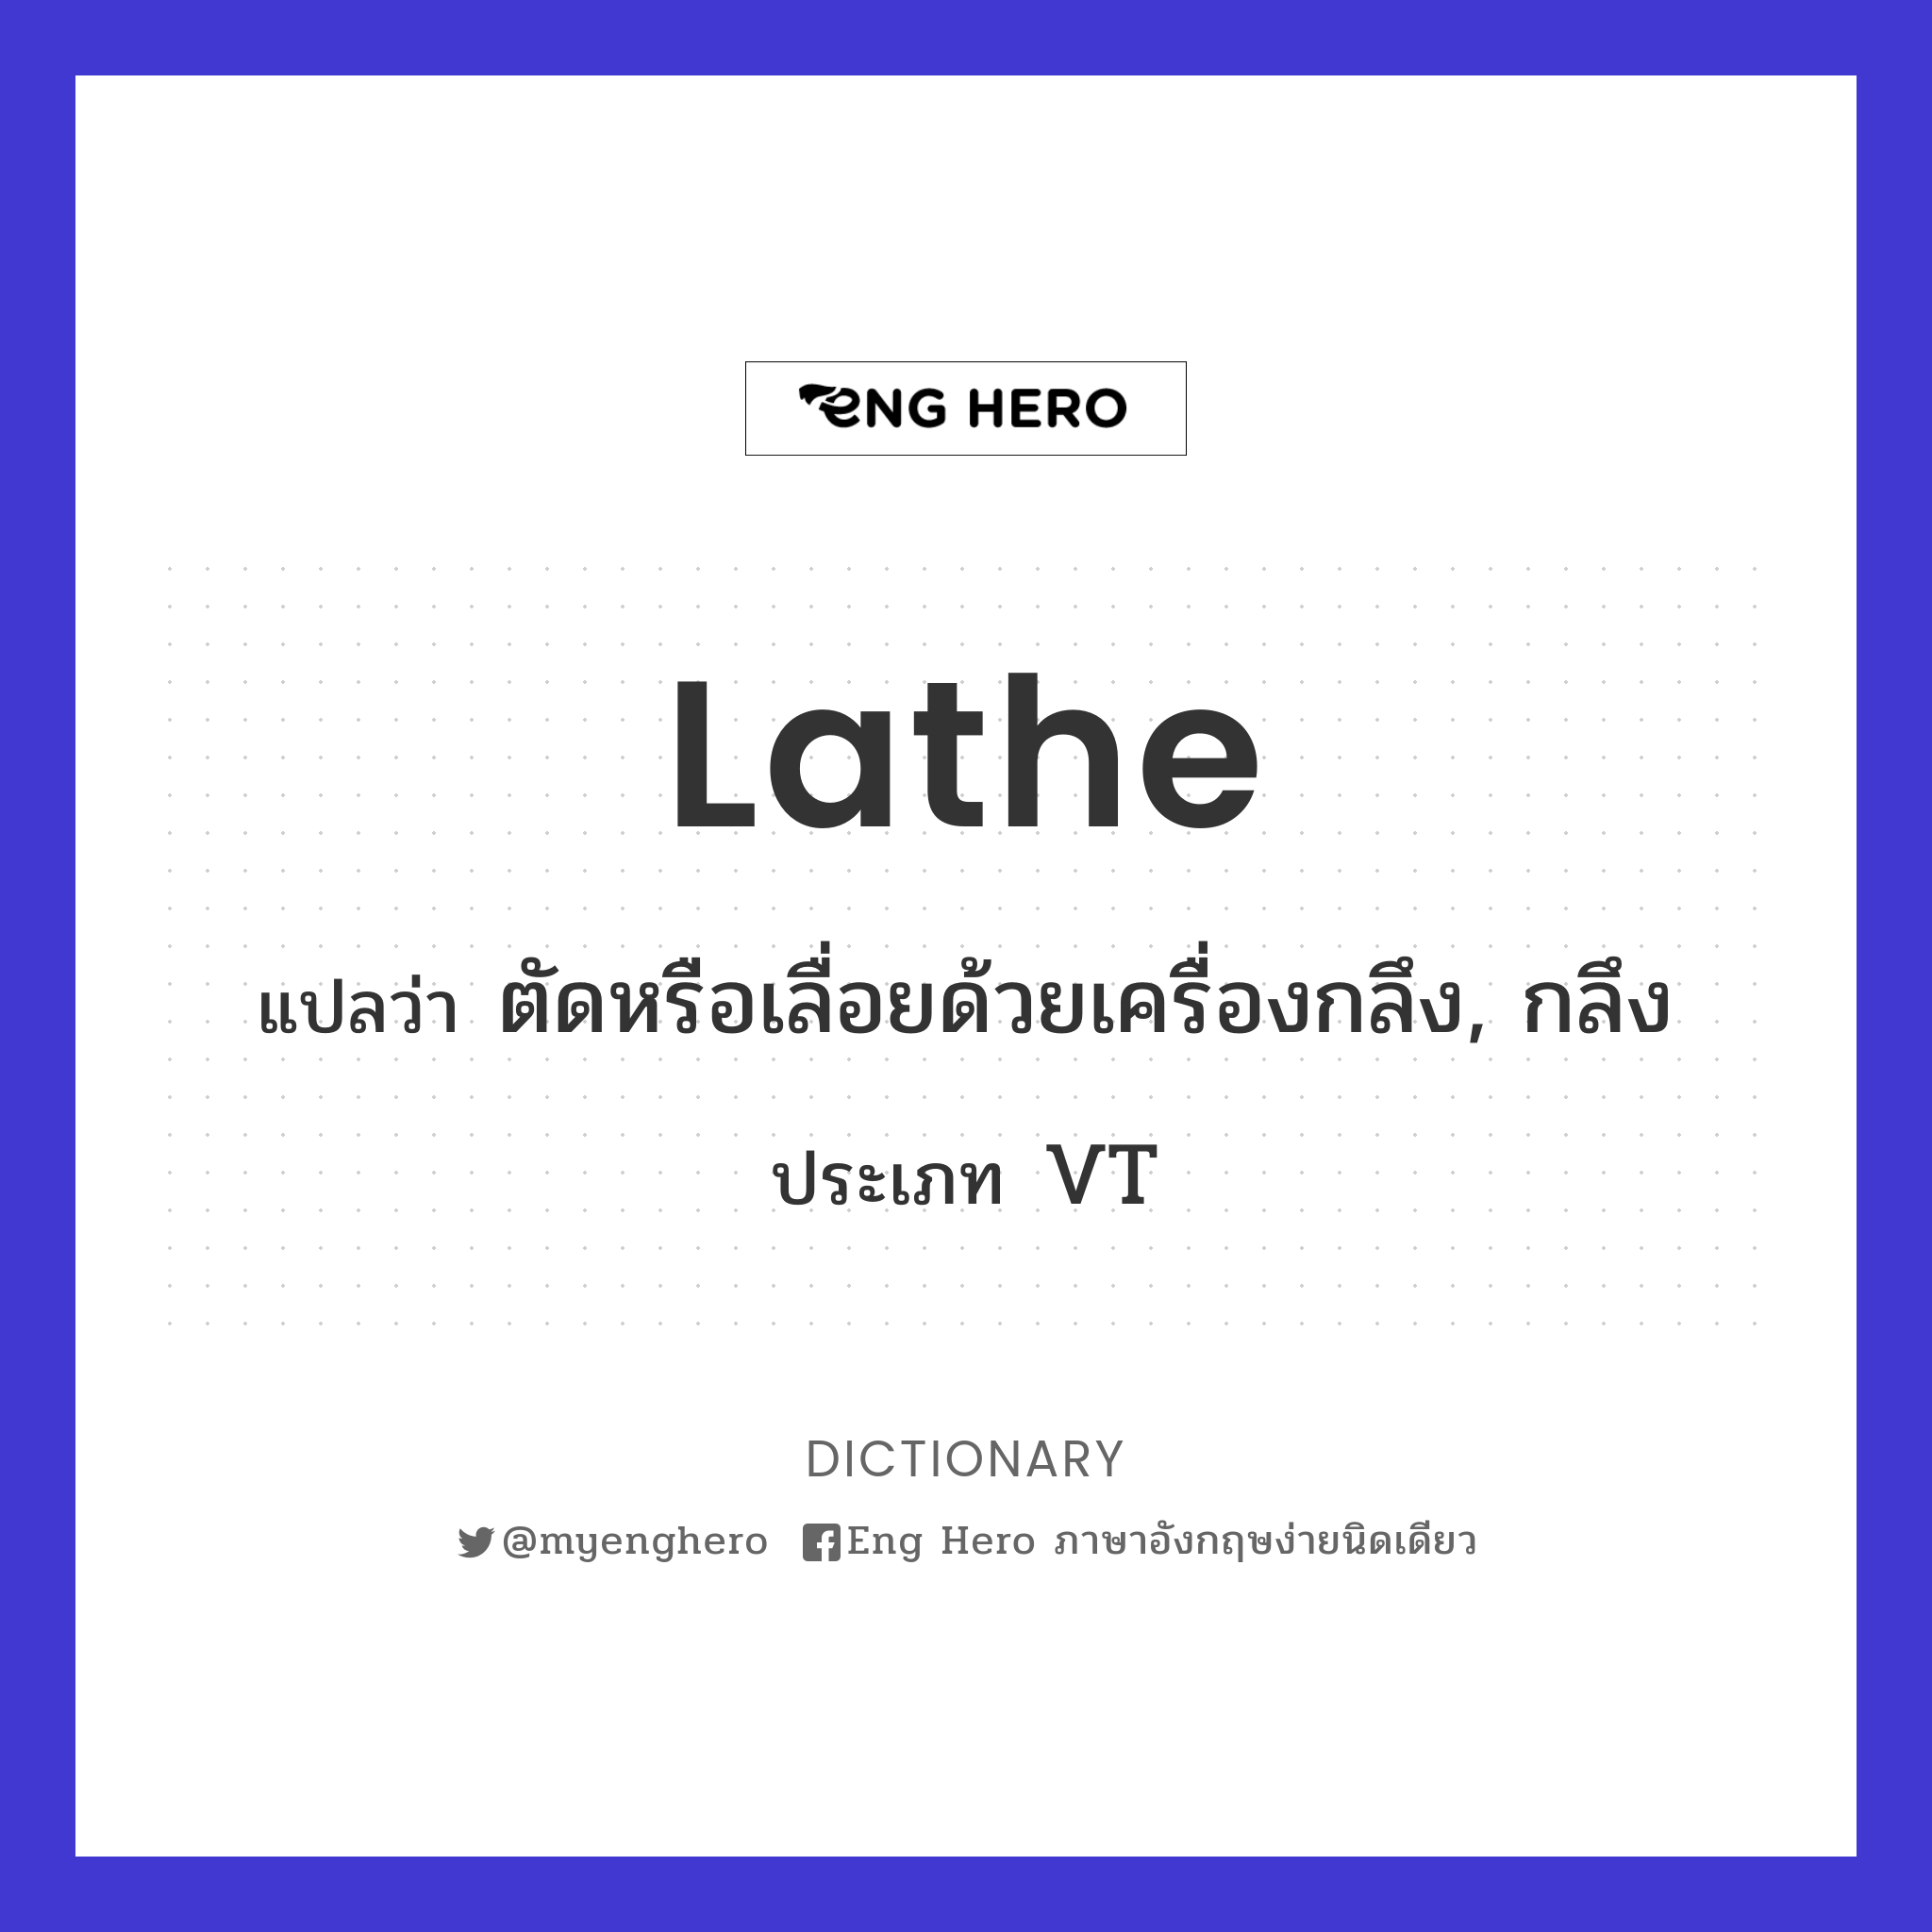 lathe